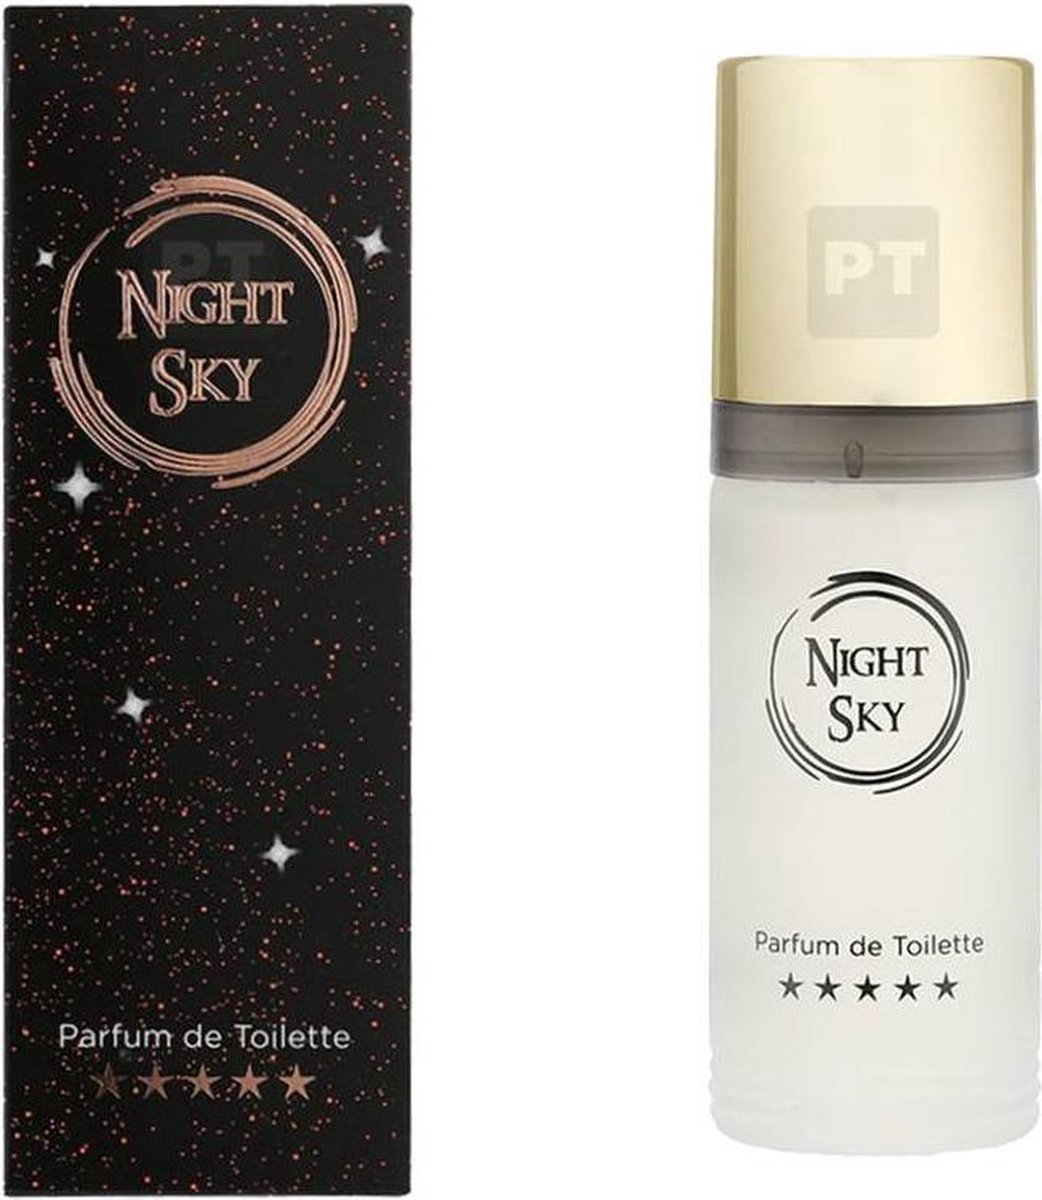 Night Sky for her by Milton Lloyd